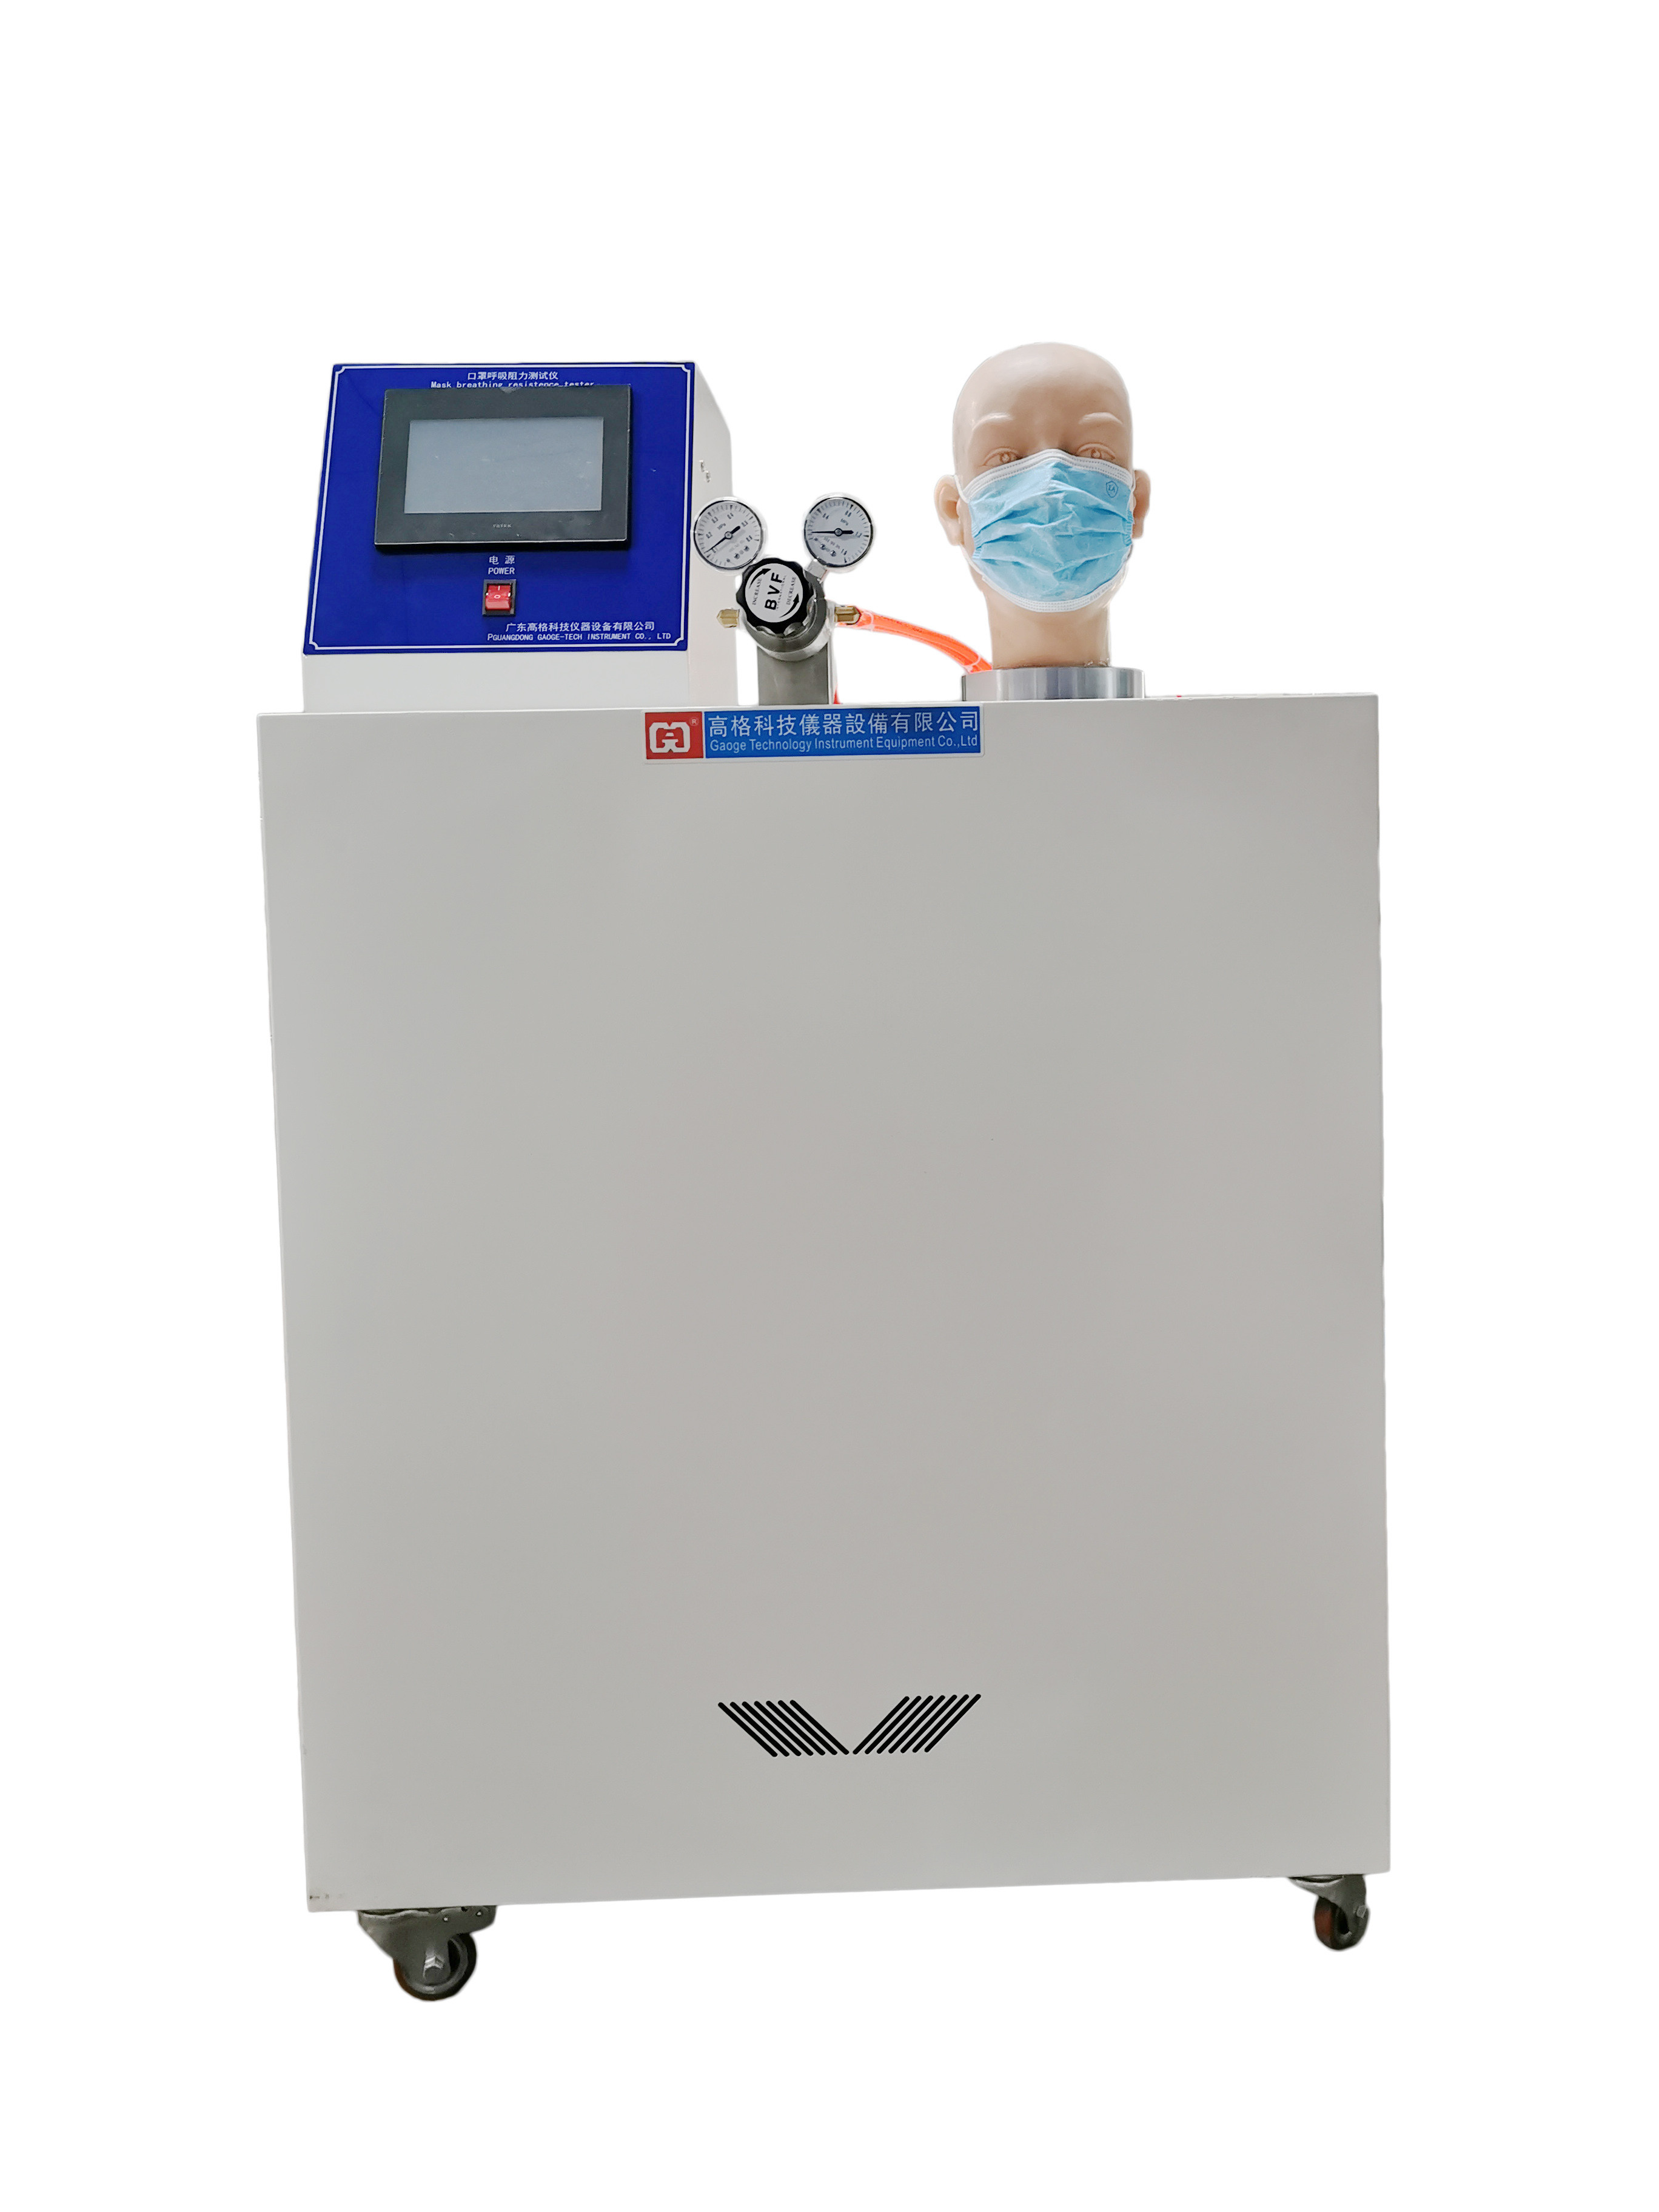  Medical Mask Respiratory Resistance Test, Flow Resolution 0.1L / Min Manufactures